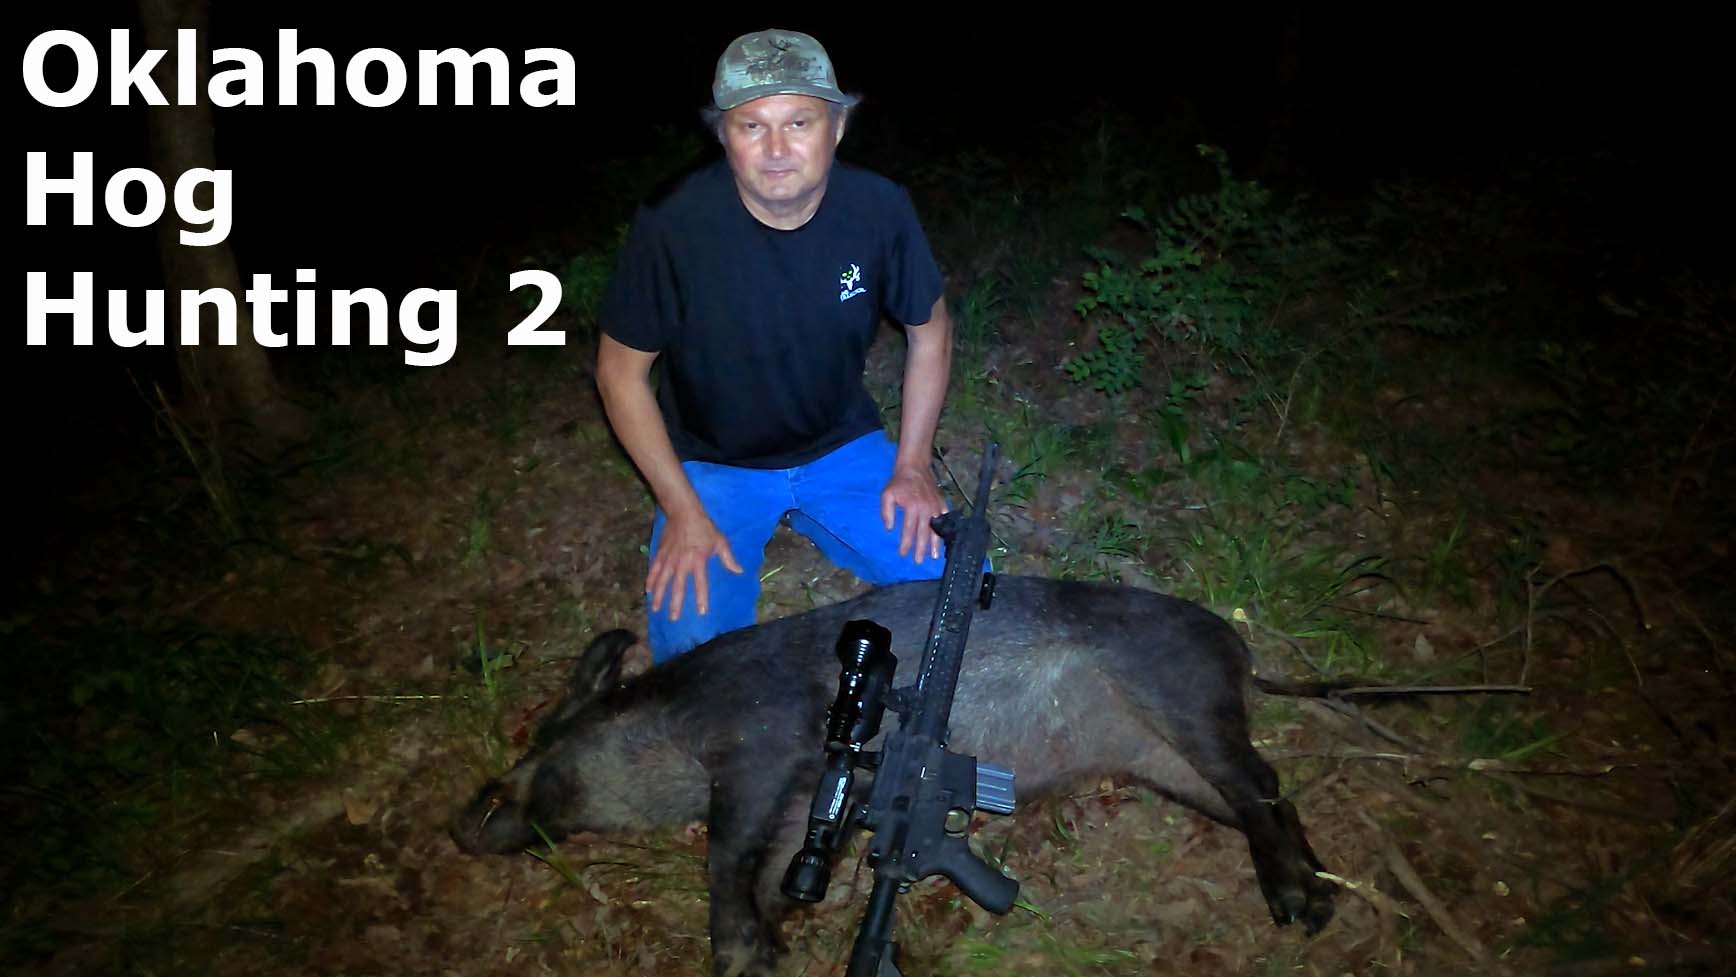 Hog Hunting Oklahoma